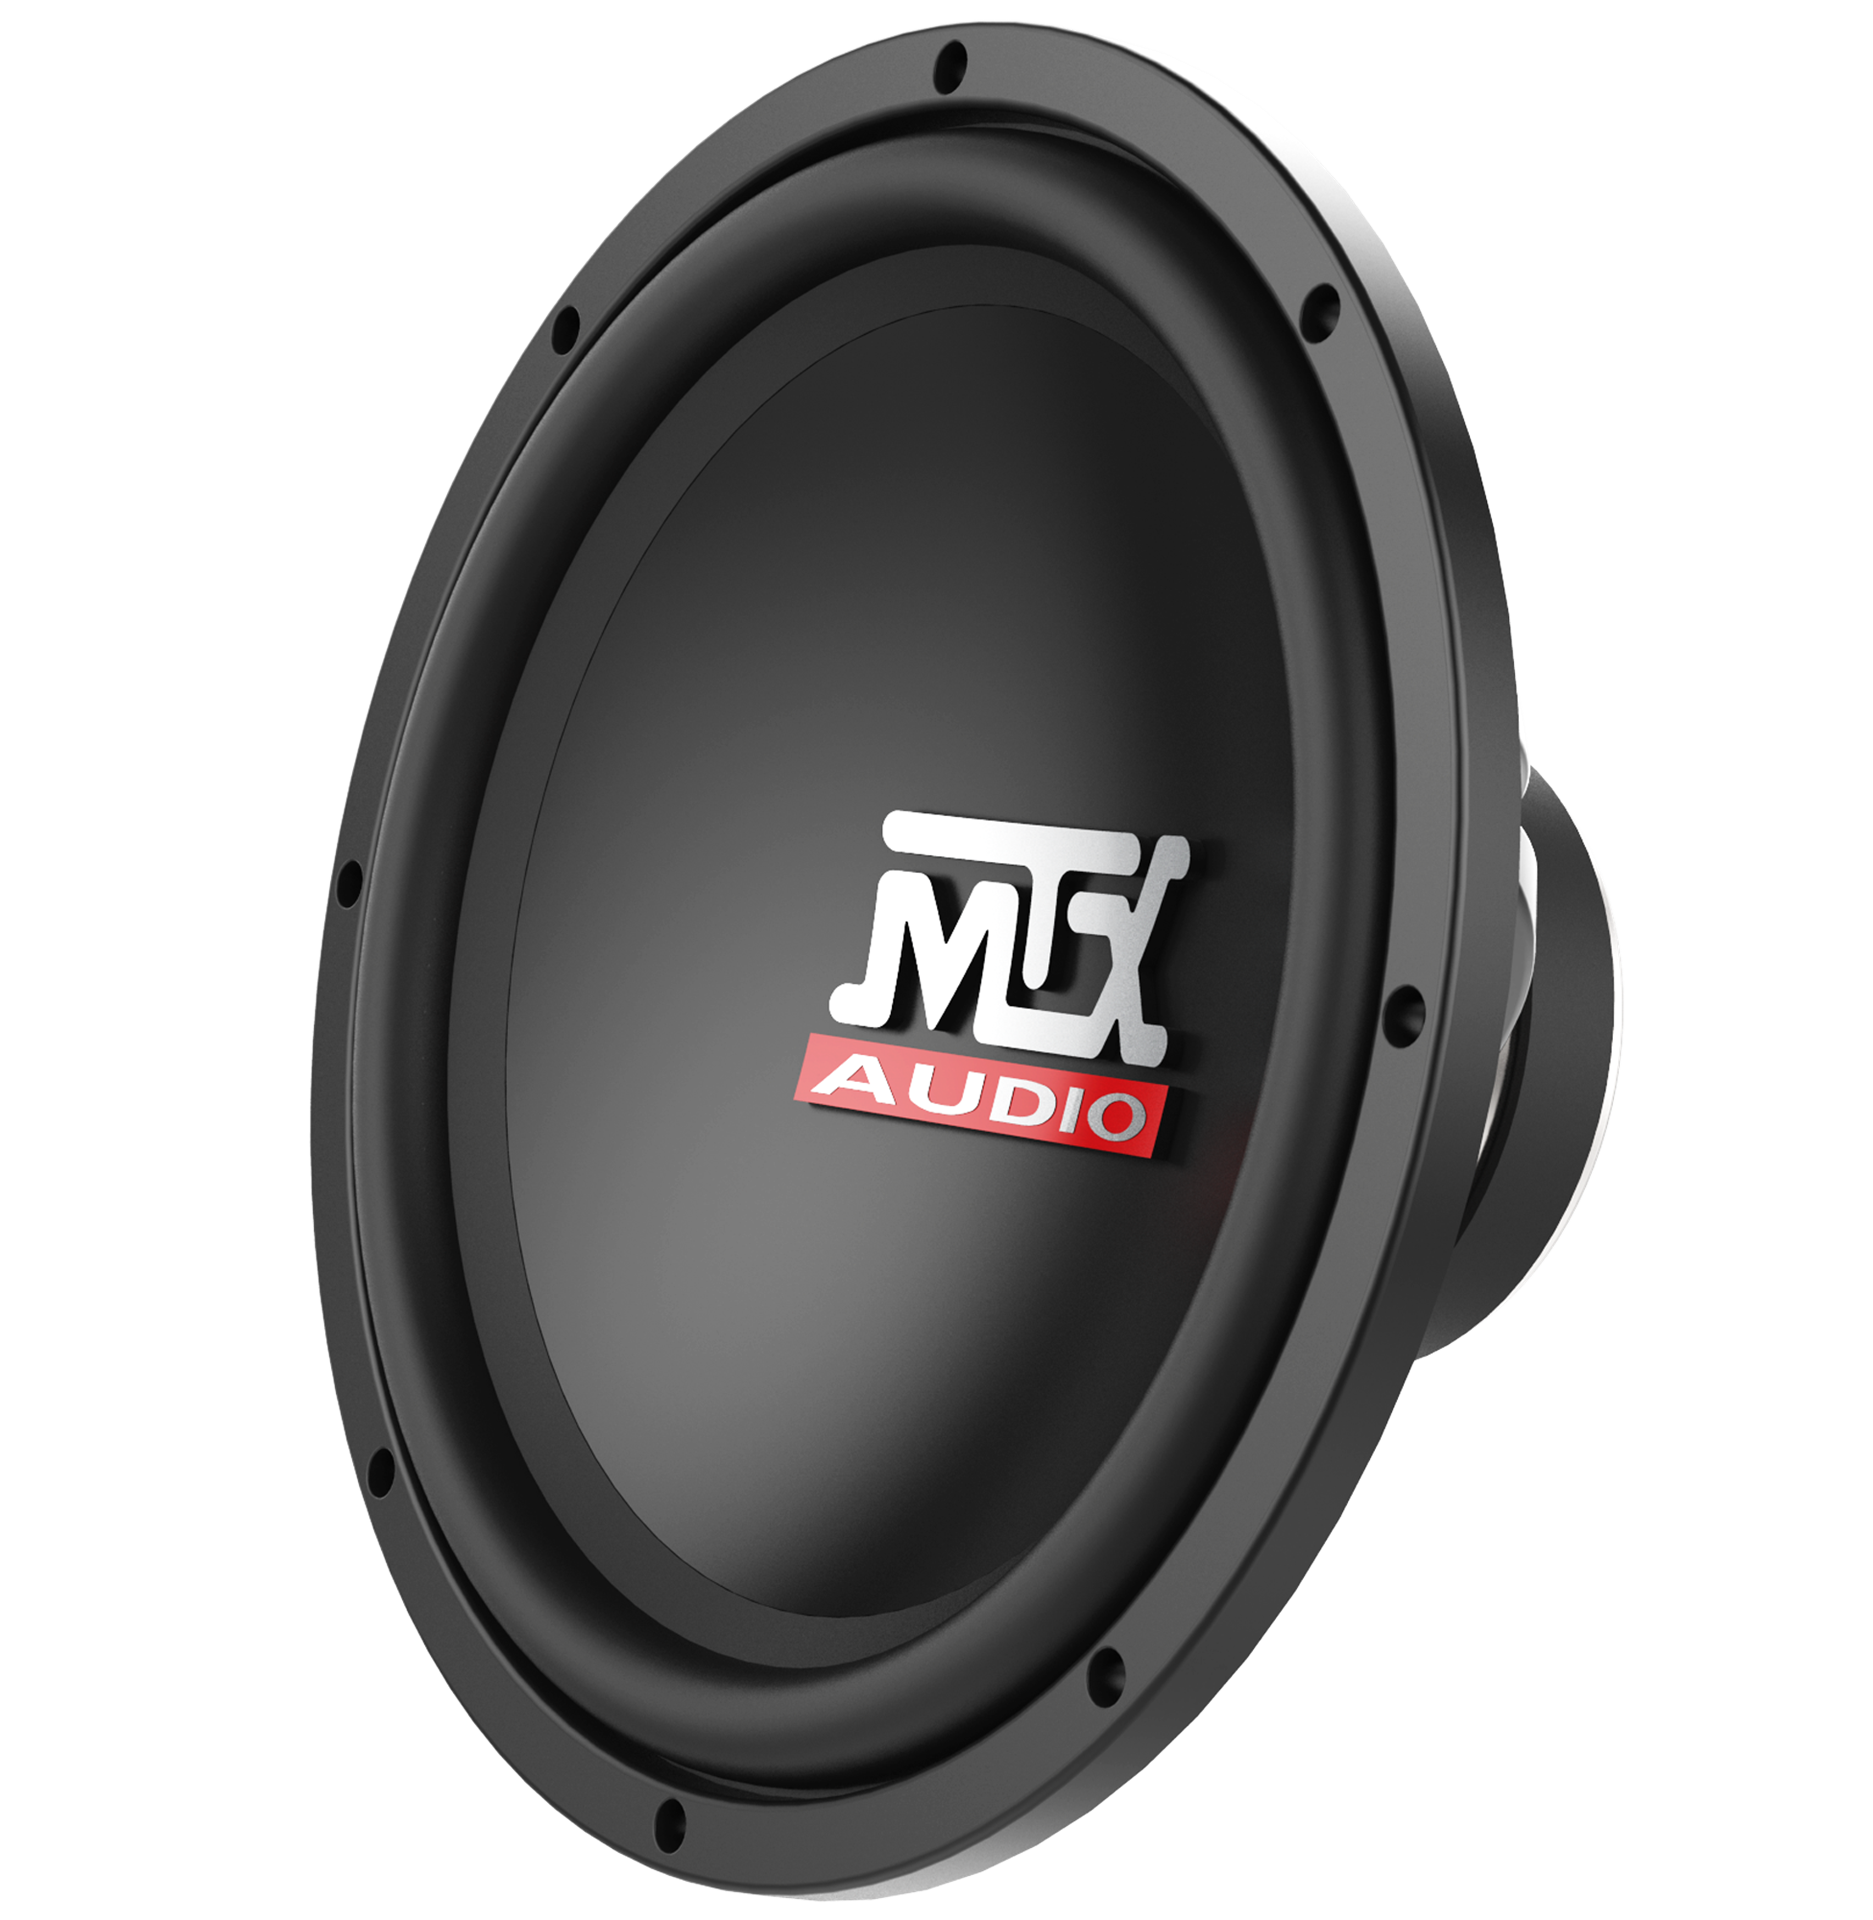 mtx audio 12 inch sub